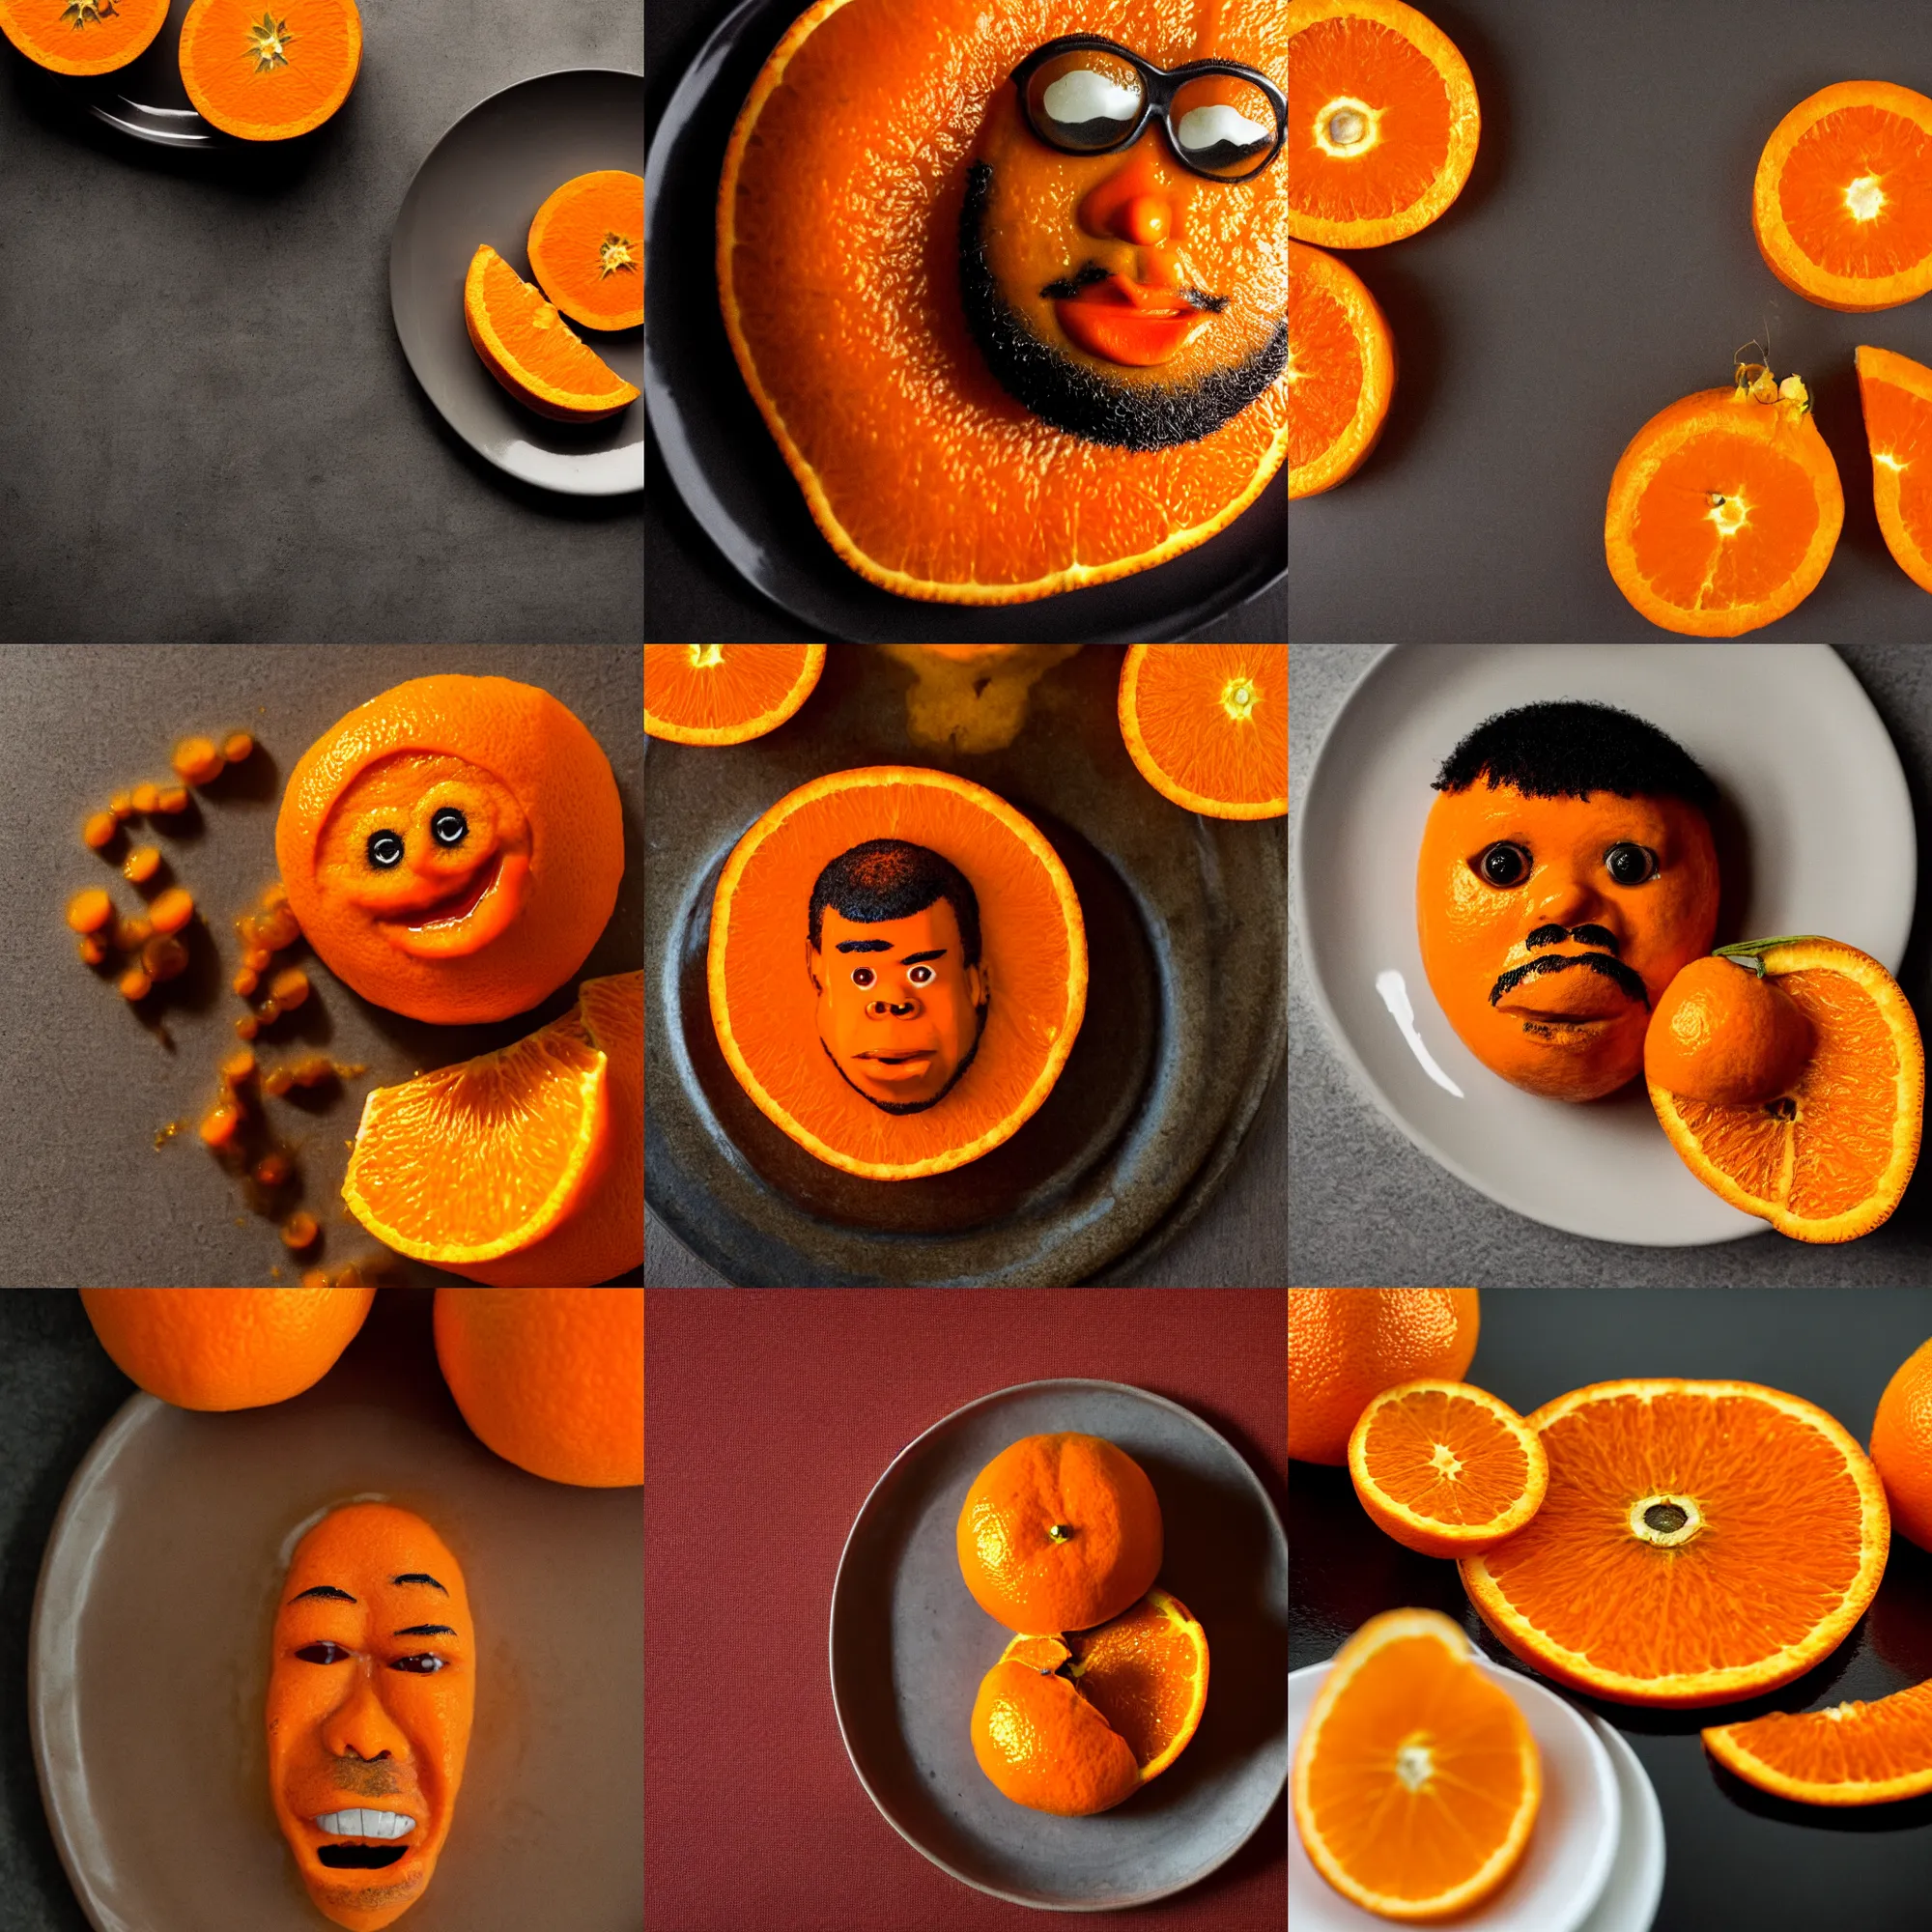 Prompt: orange that looks like jordan peele, jordan peele's face, a bearded orange on a plate, macro shot, high detail photo, cute